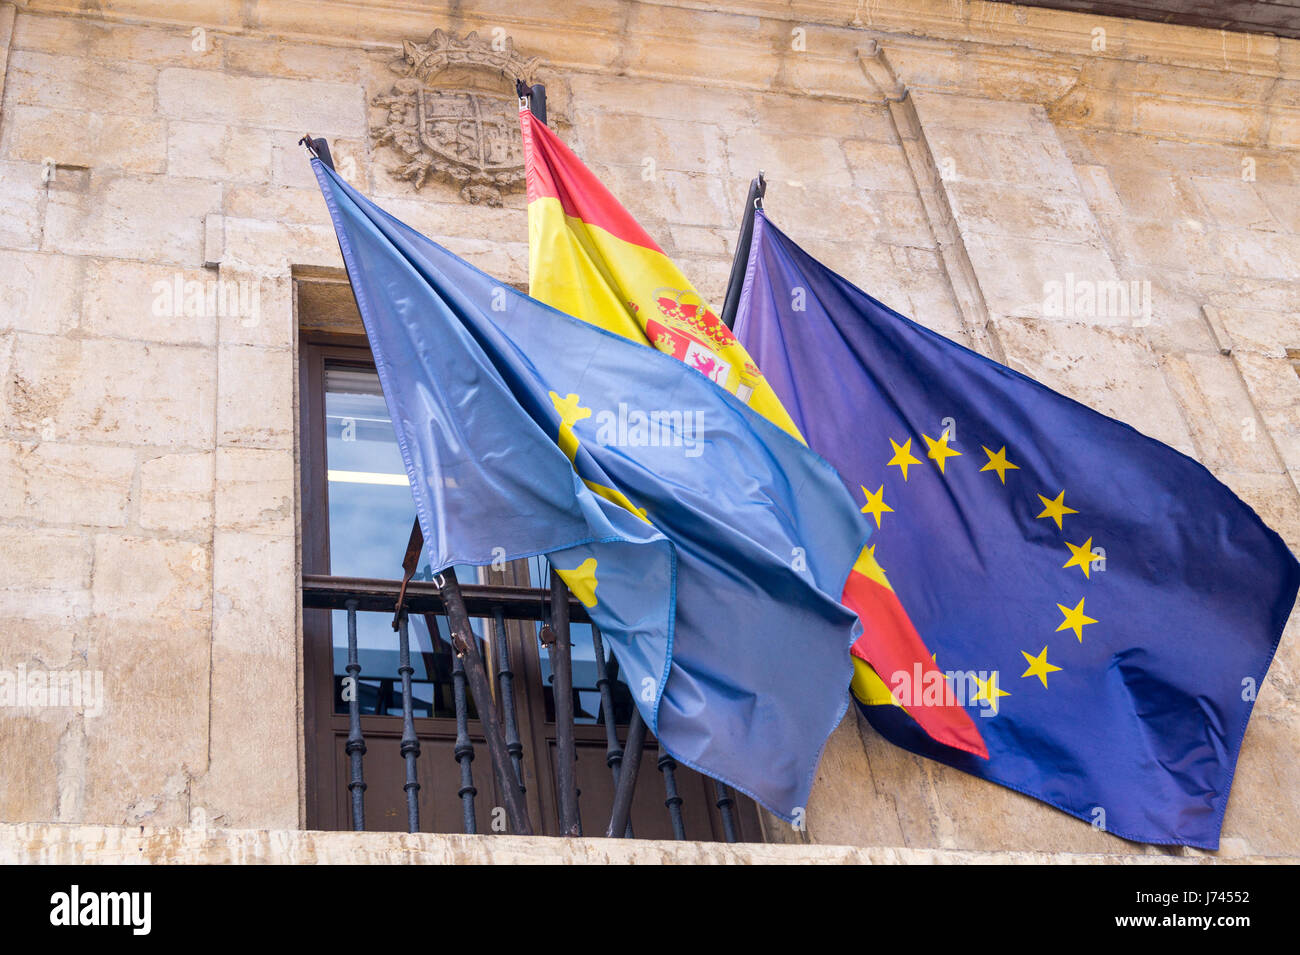 Flags of the Principality of Asturias, Kingdom of Spain and European Union outside a government building, Oviedo, Asturias, Spain Stock Photo